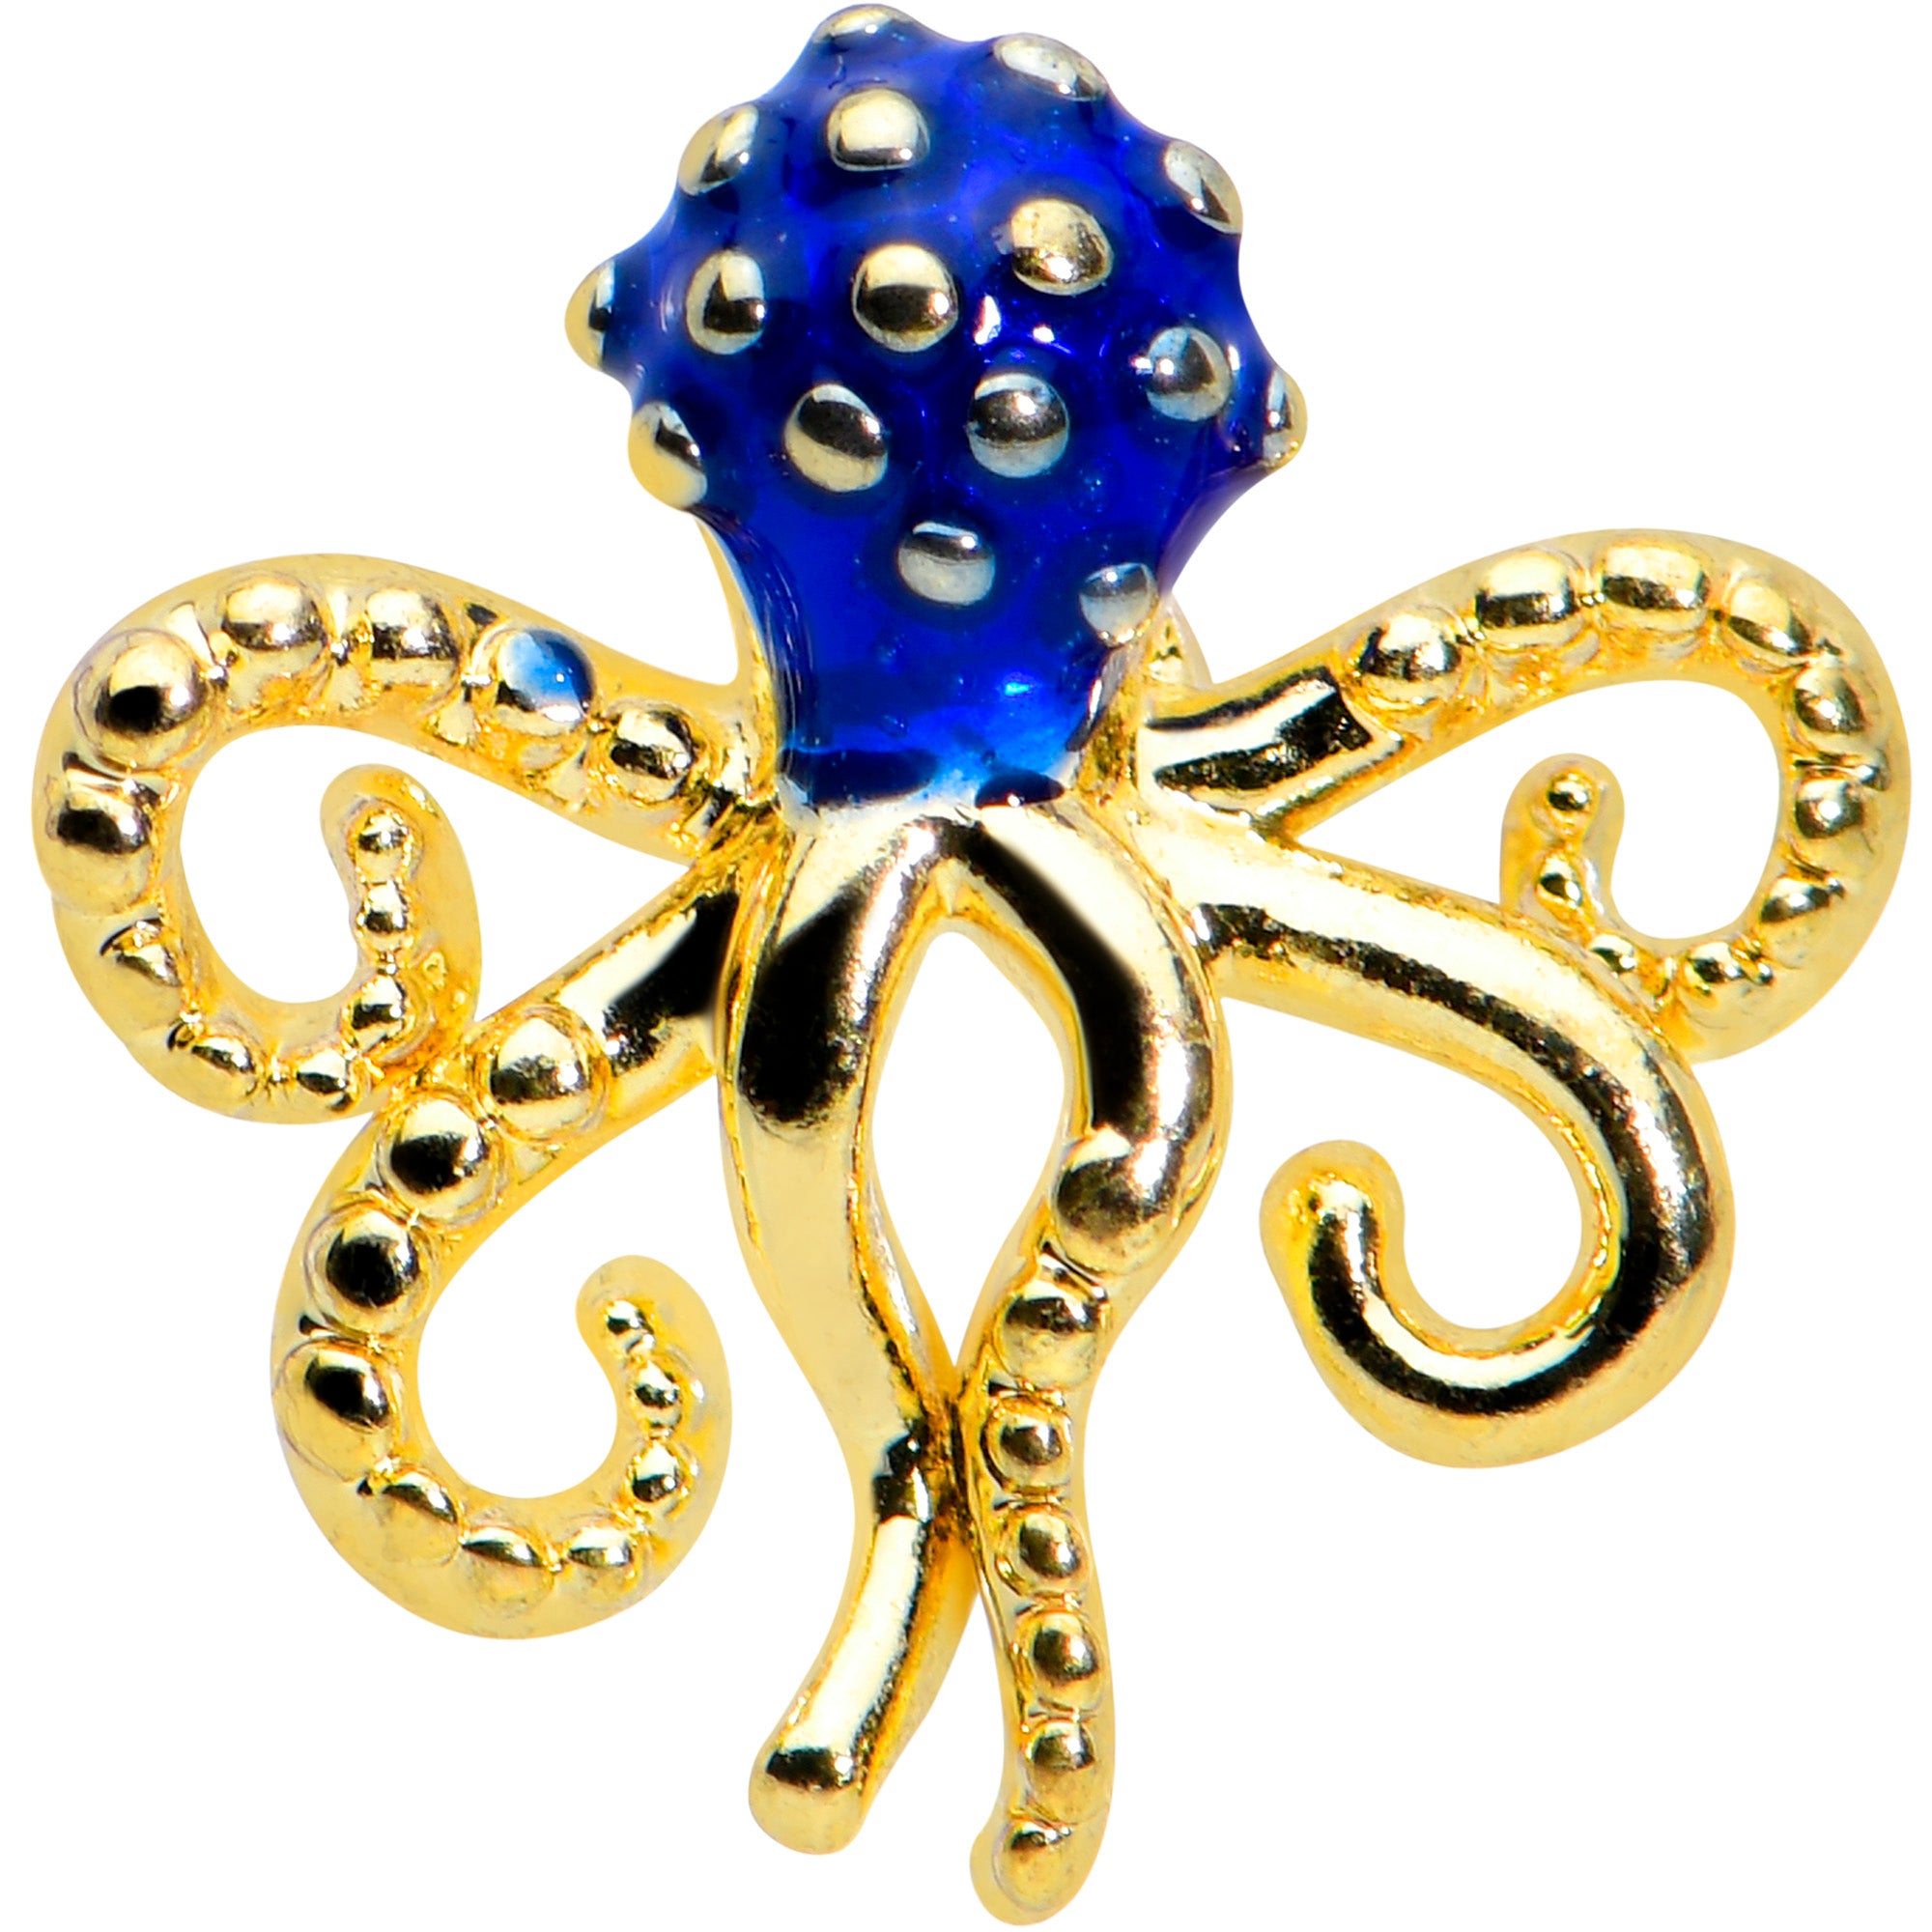 16 Gauge 5/16 Gold Tone Textured Blue Octopus Labret Monroe Tragus